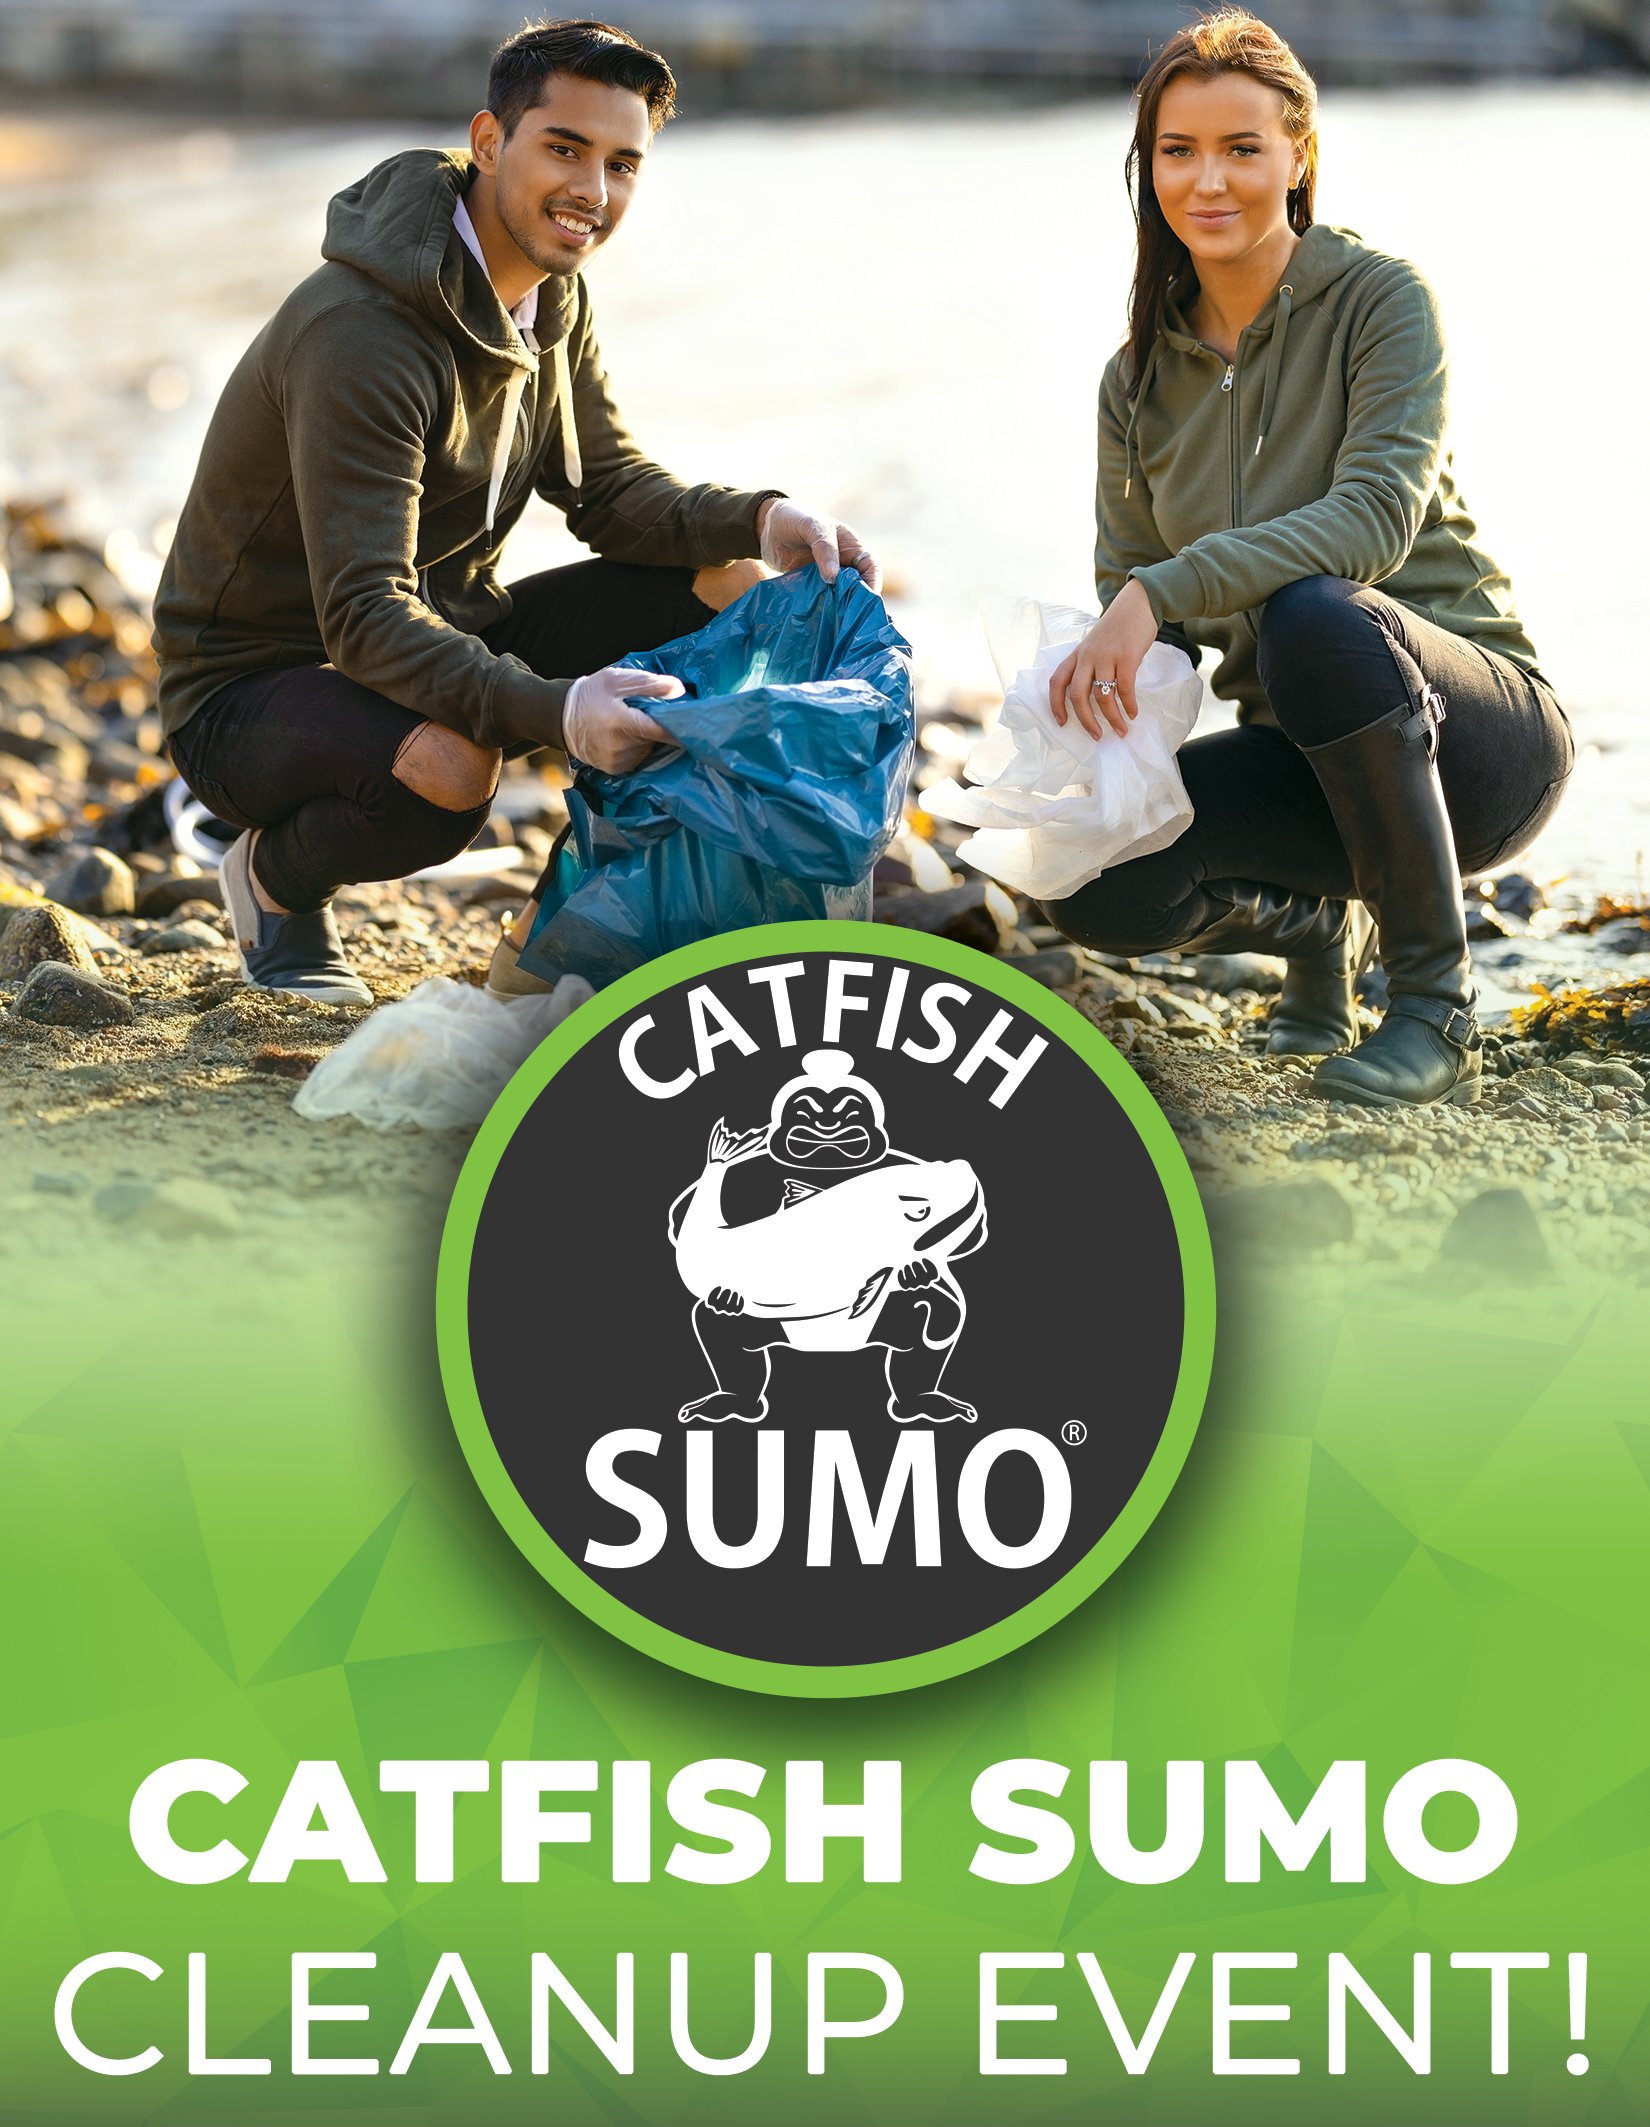 Catfish Sumo Brand Rewards Anglers for Picking Up Trash